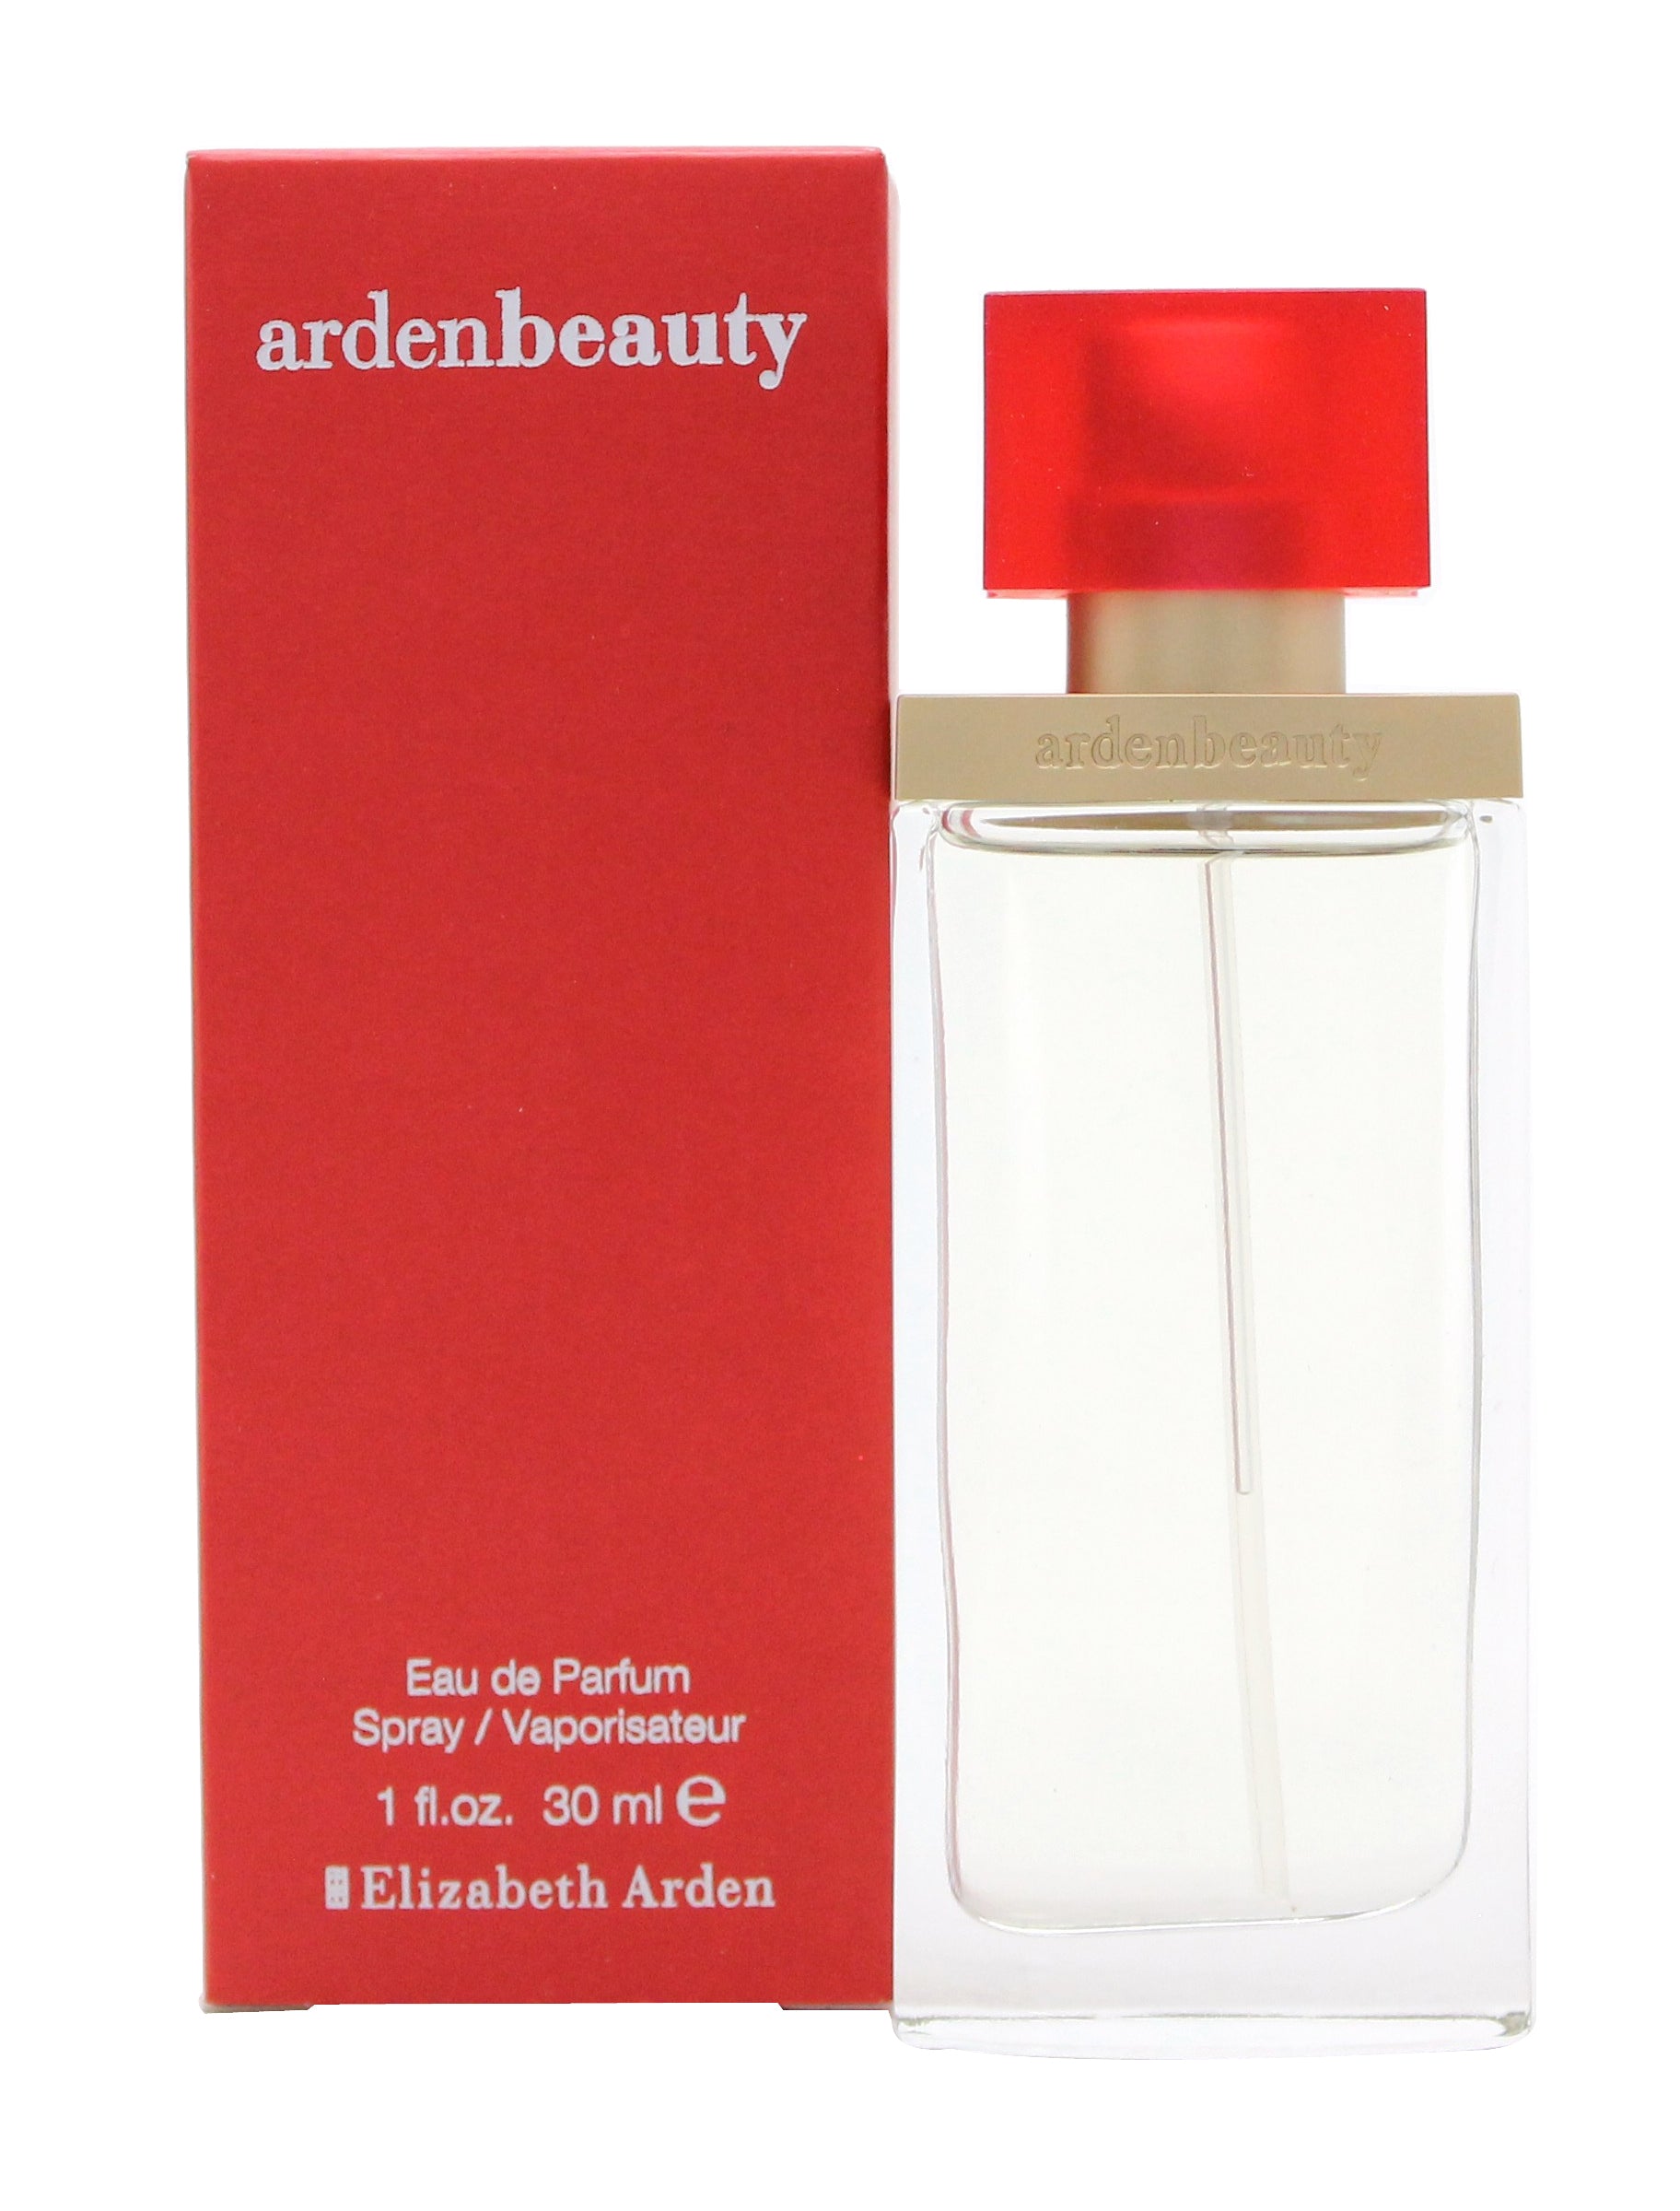 View Elizabeth Arden Beauty Eau de Parfum 30ml Spray information